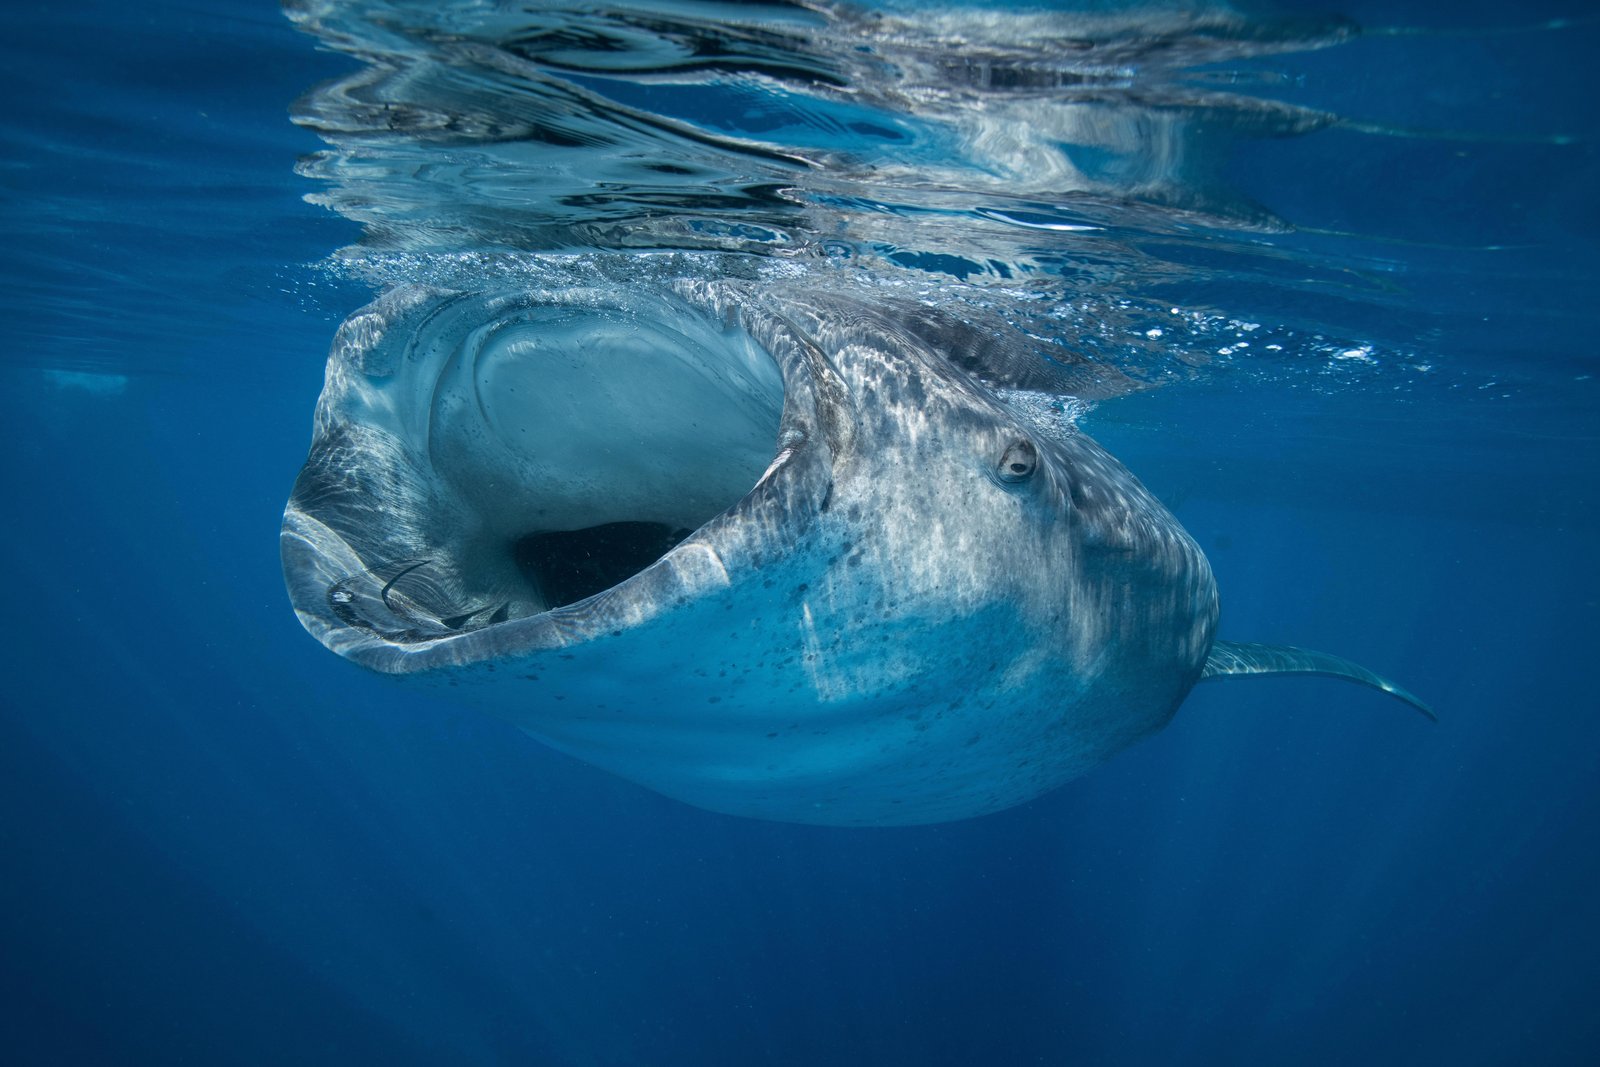 10 underwater photos that show the wonder of the ocean | OverSixty